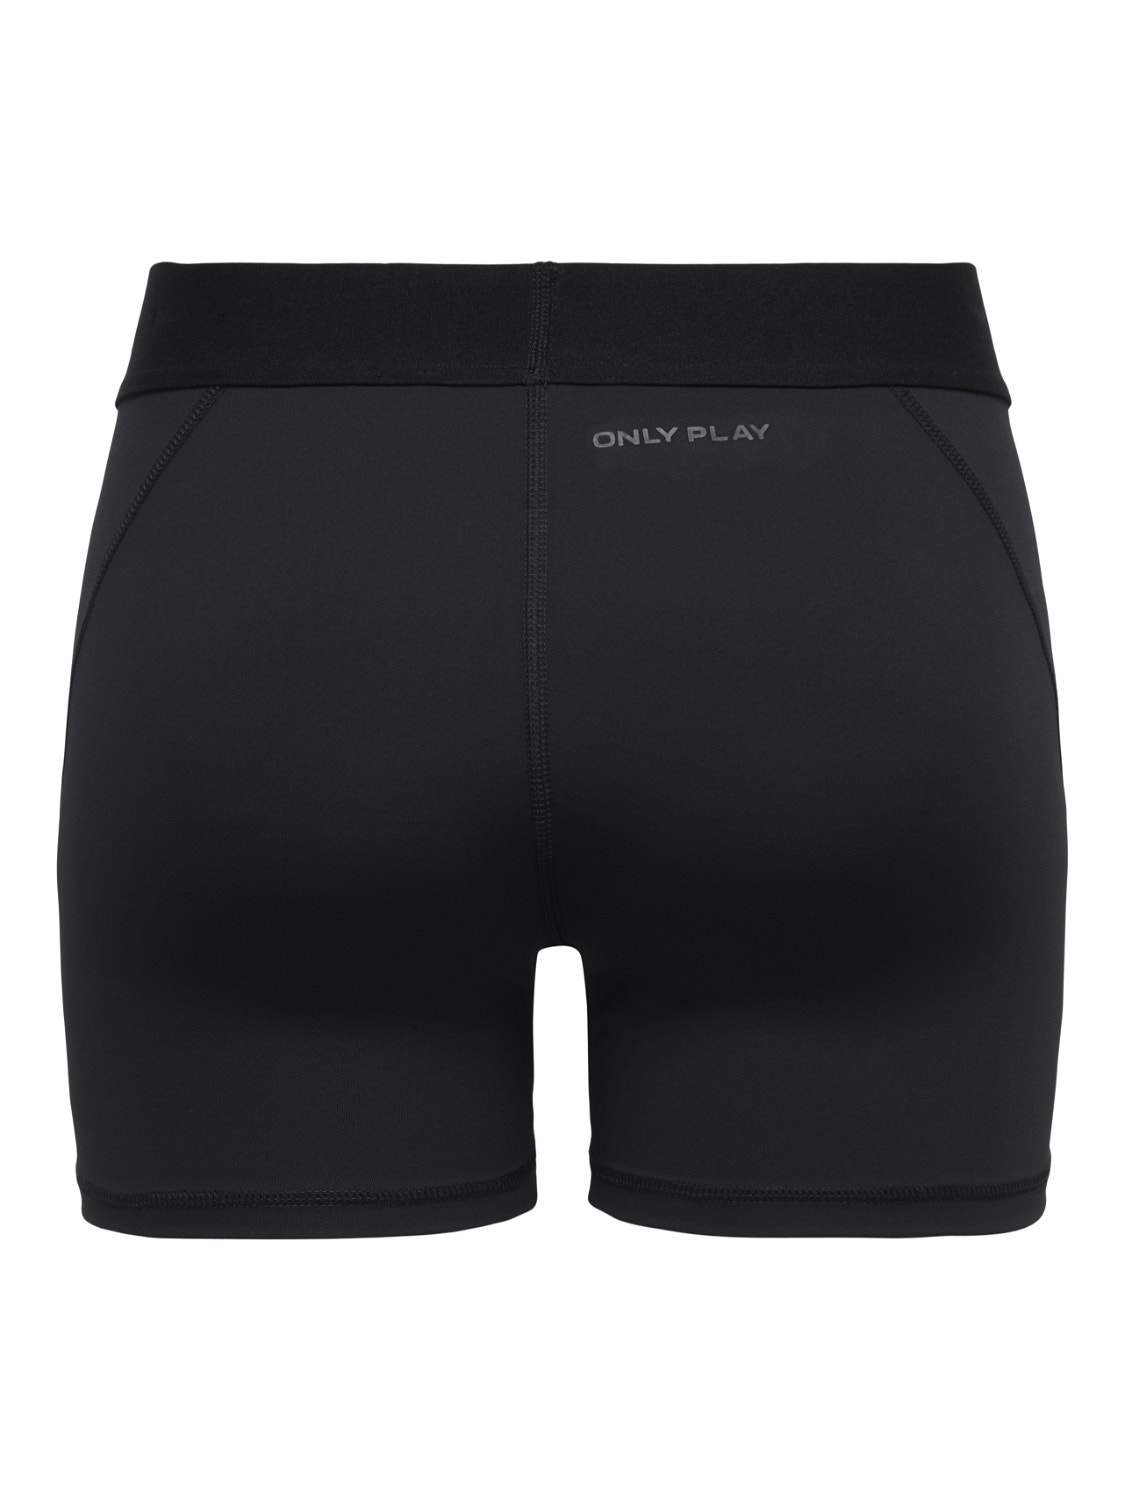 Calvin Klein Tight Gym Shorts Womens - Black